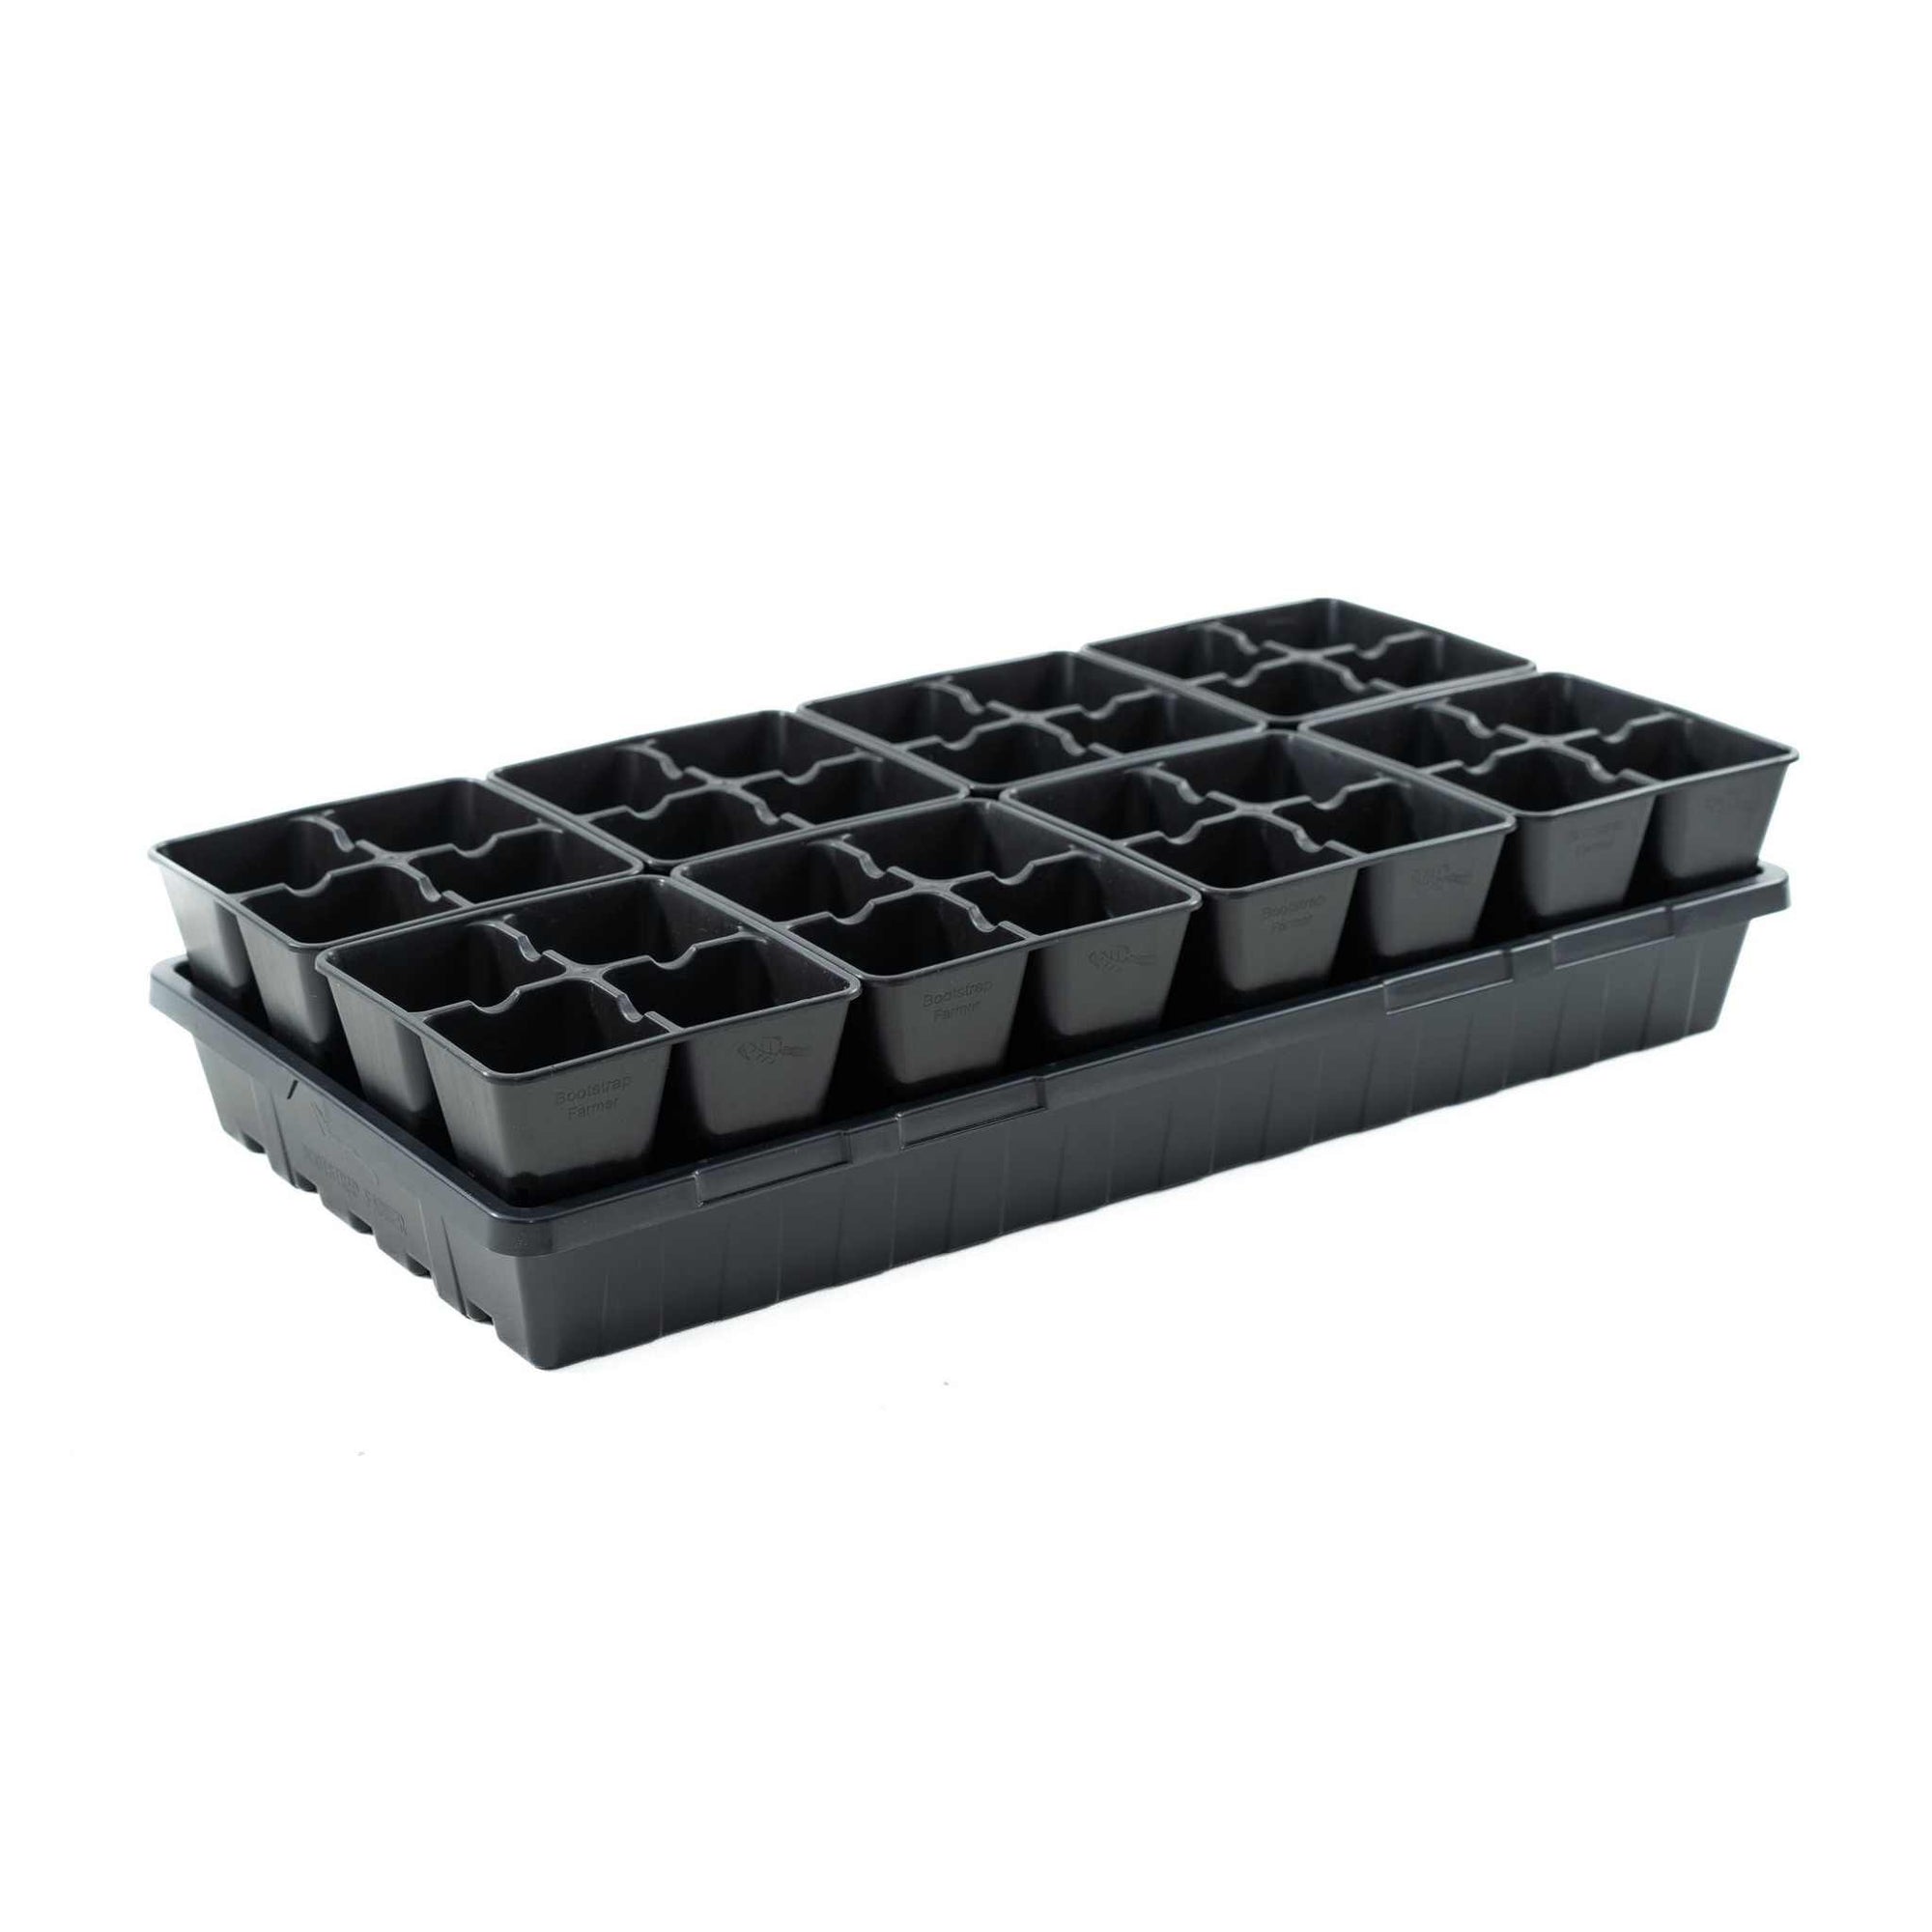 8 Black 4 cell plug trays inside a 1020 tray